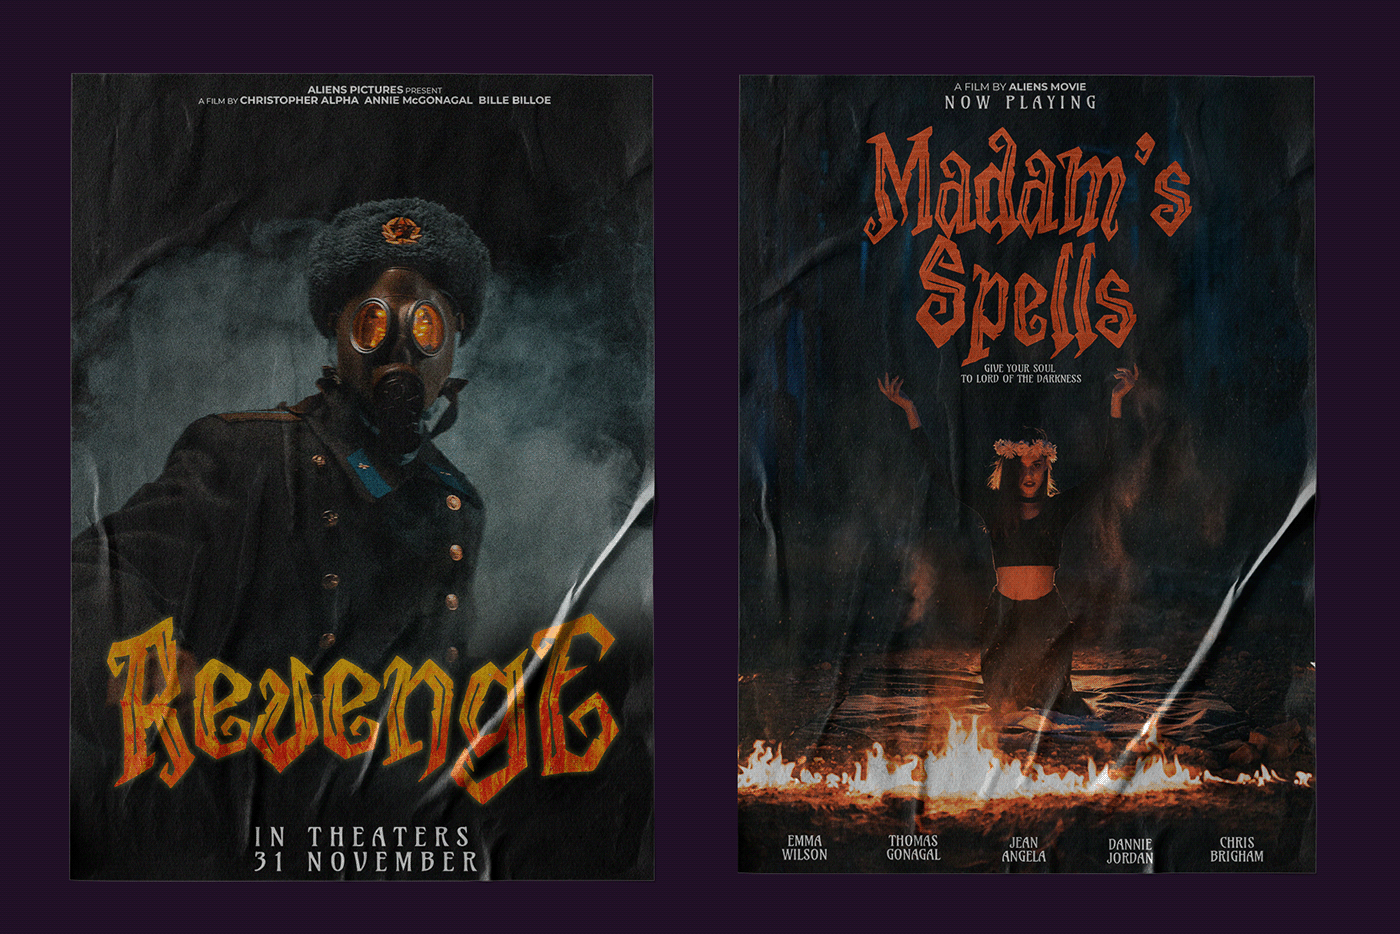 display font font Halloween Hellscourt horror ilhamtaro Poster Design Social media post typealiens Typeface